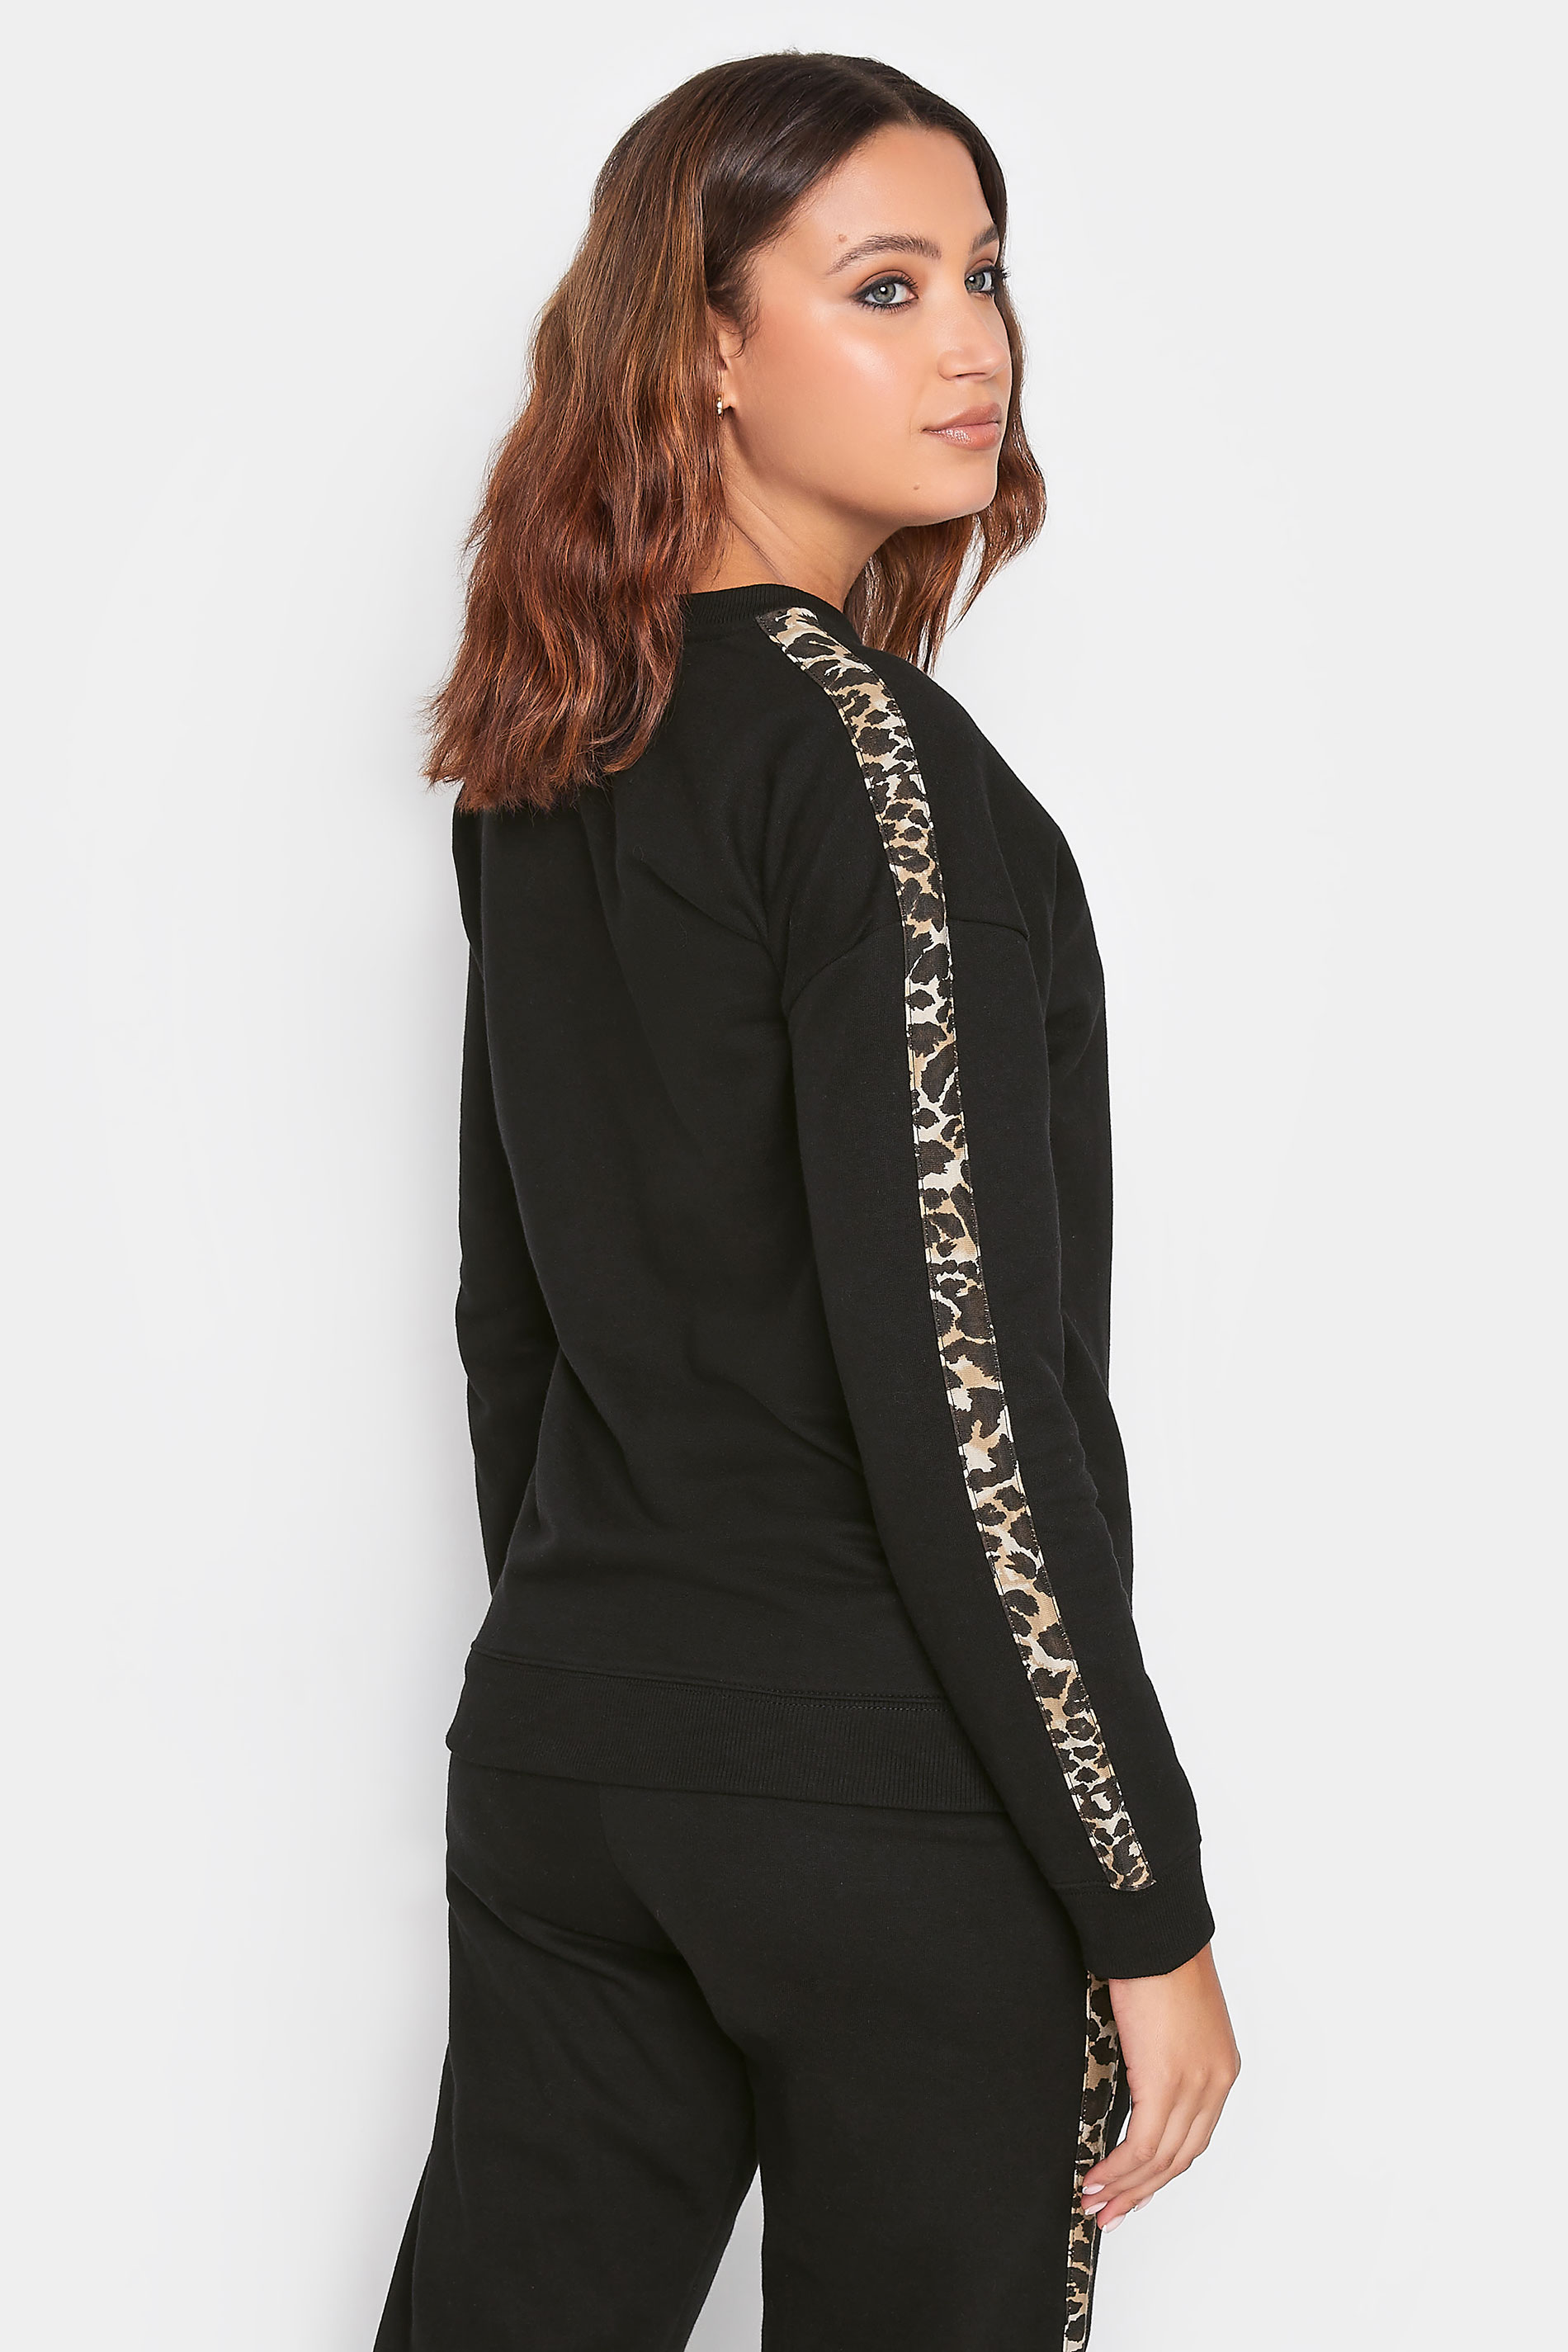 LTS Tall Black Animal Print Stripe Sweatshirt | Long Tall Sally 3